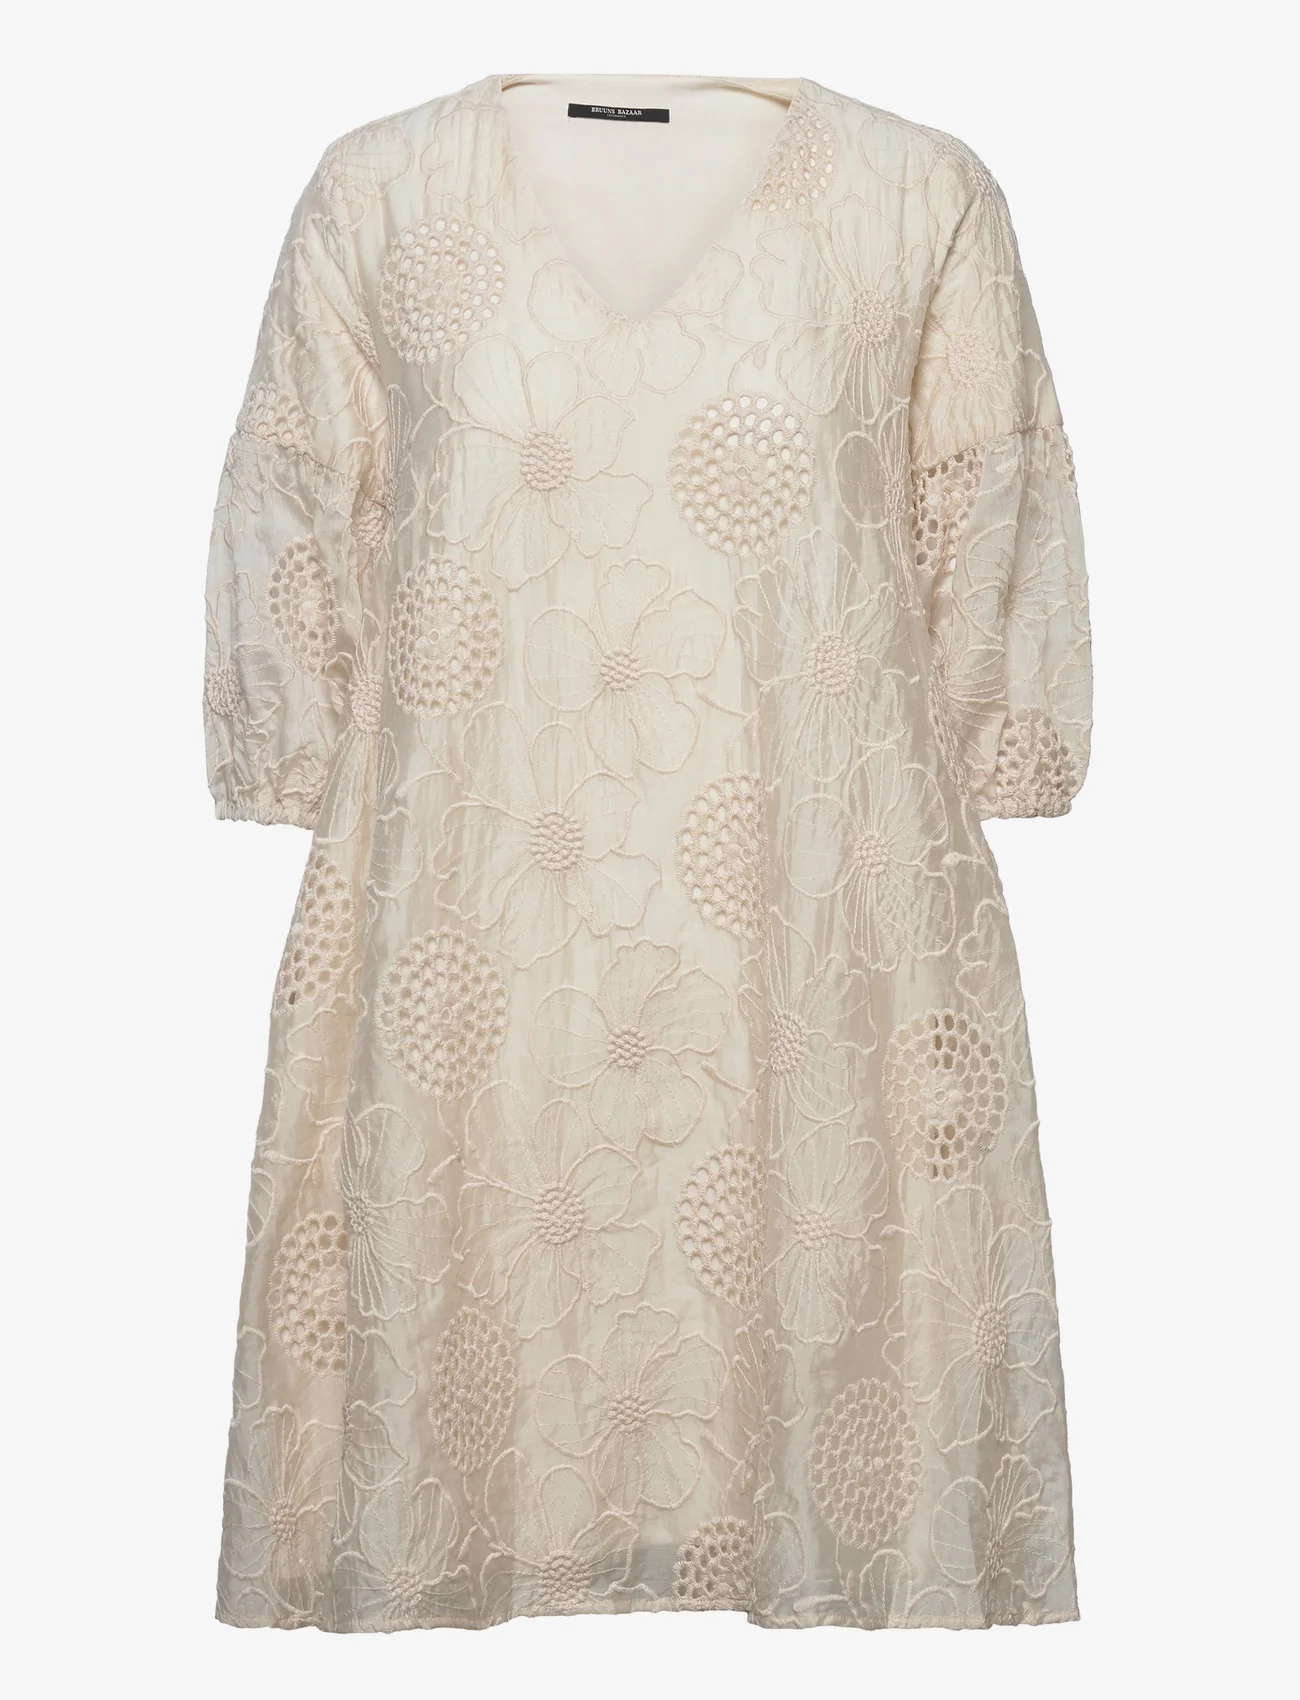 Bruuns Bazaar - Clematis Eileen dress - krótkie sukienki - sandstorm - 0